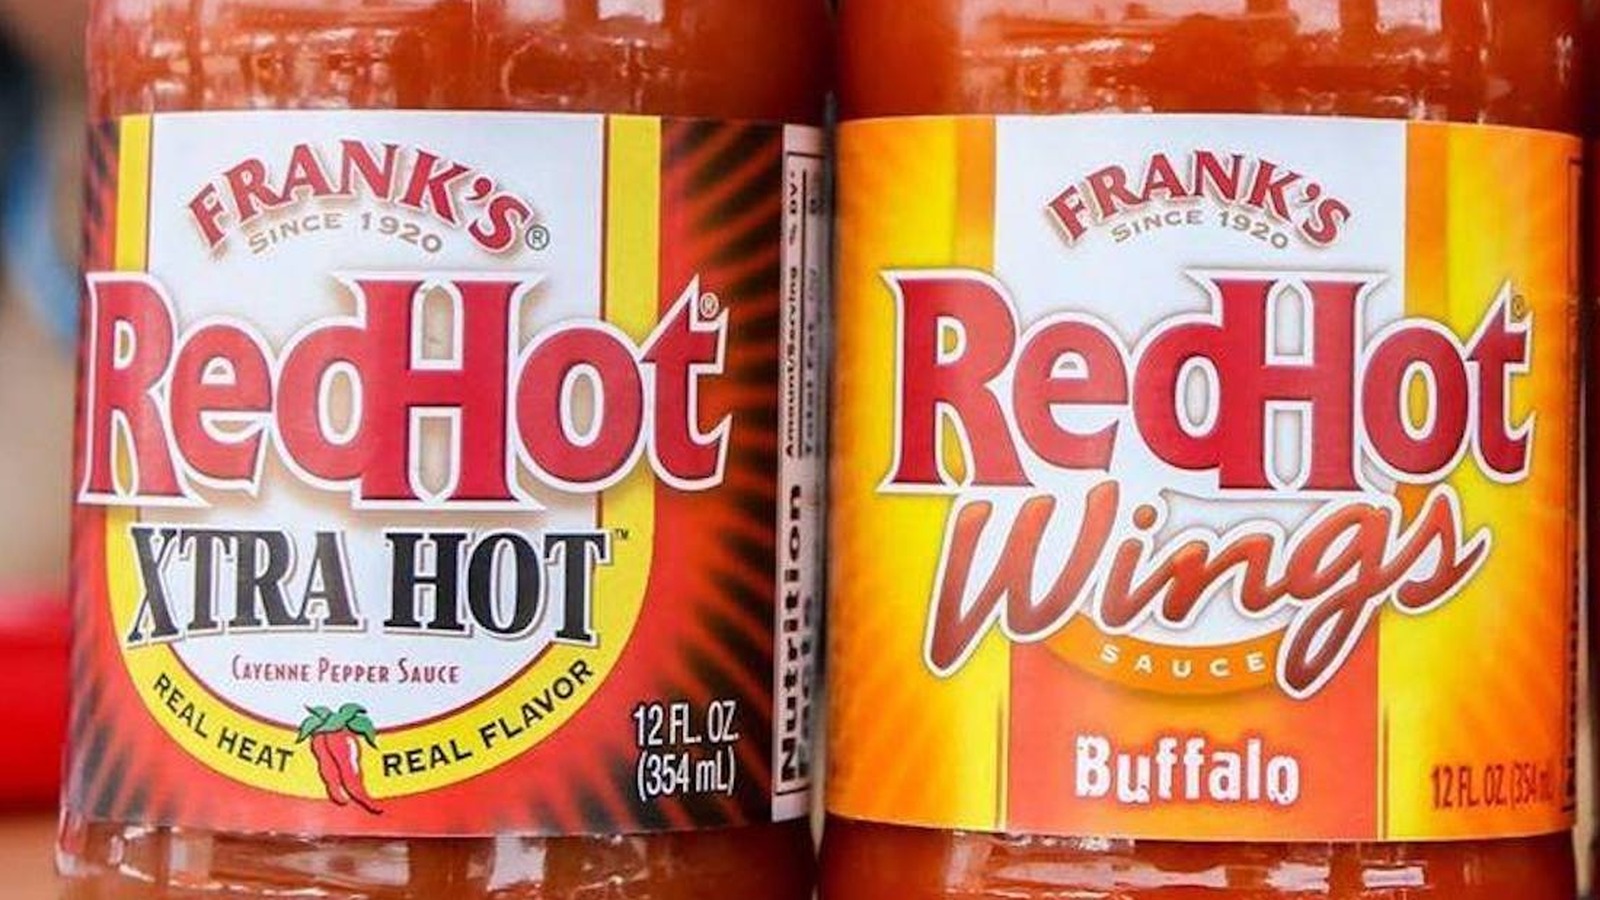 Frank's RedHot Mild Wings Sauce, Nashville Hot Seasoning